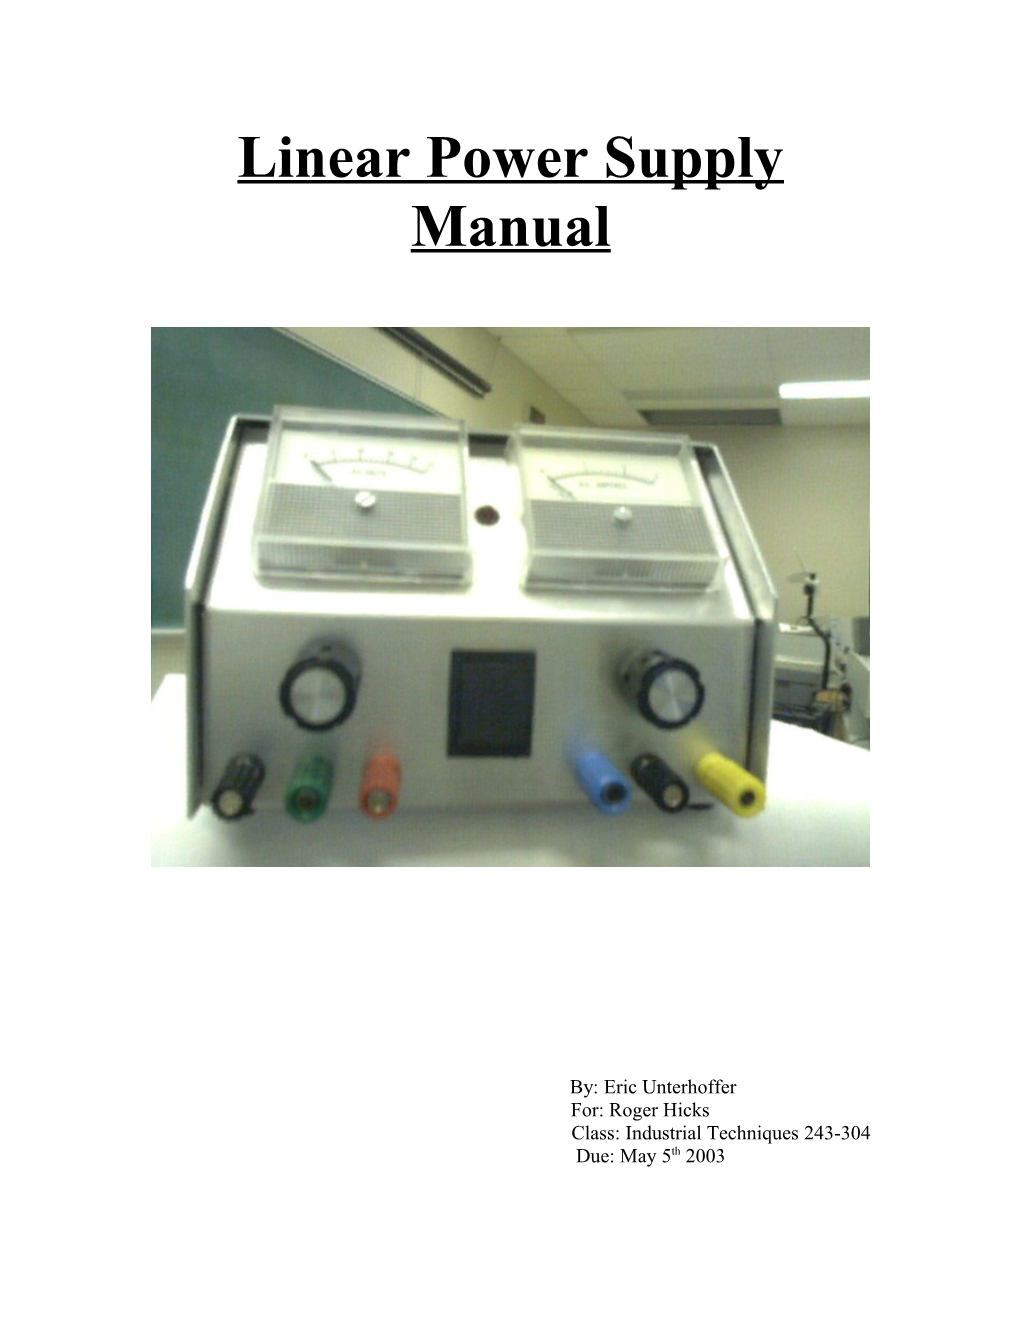 Linear Power Supply Manual